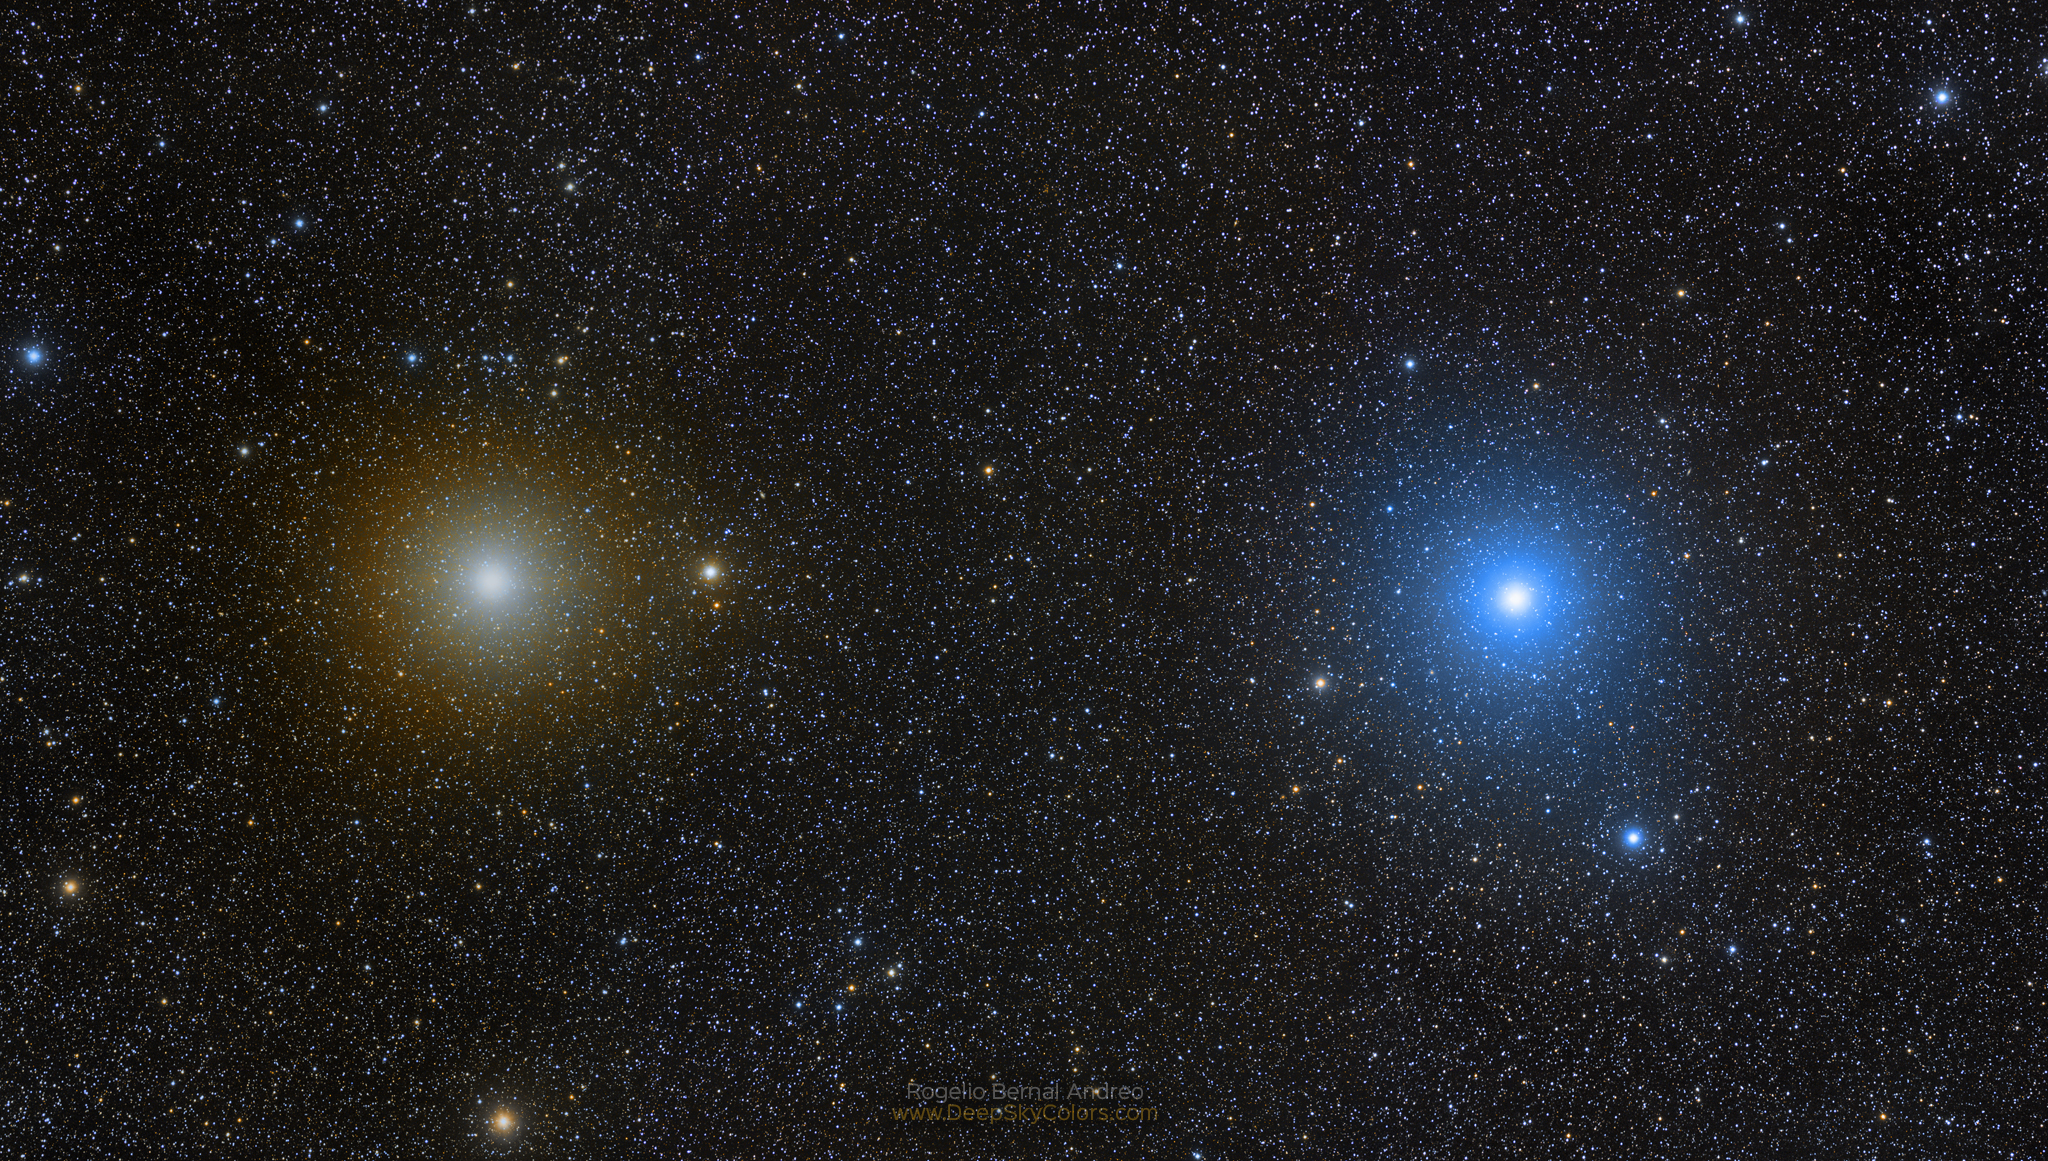 Apod 2017 May 16 Gemini Stars Pollux And Castor